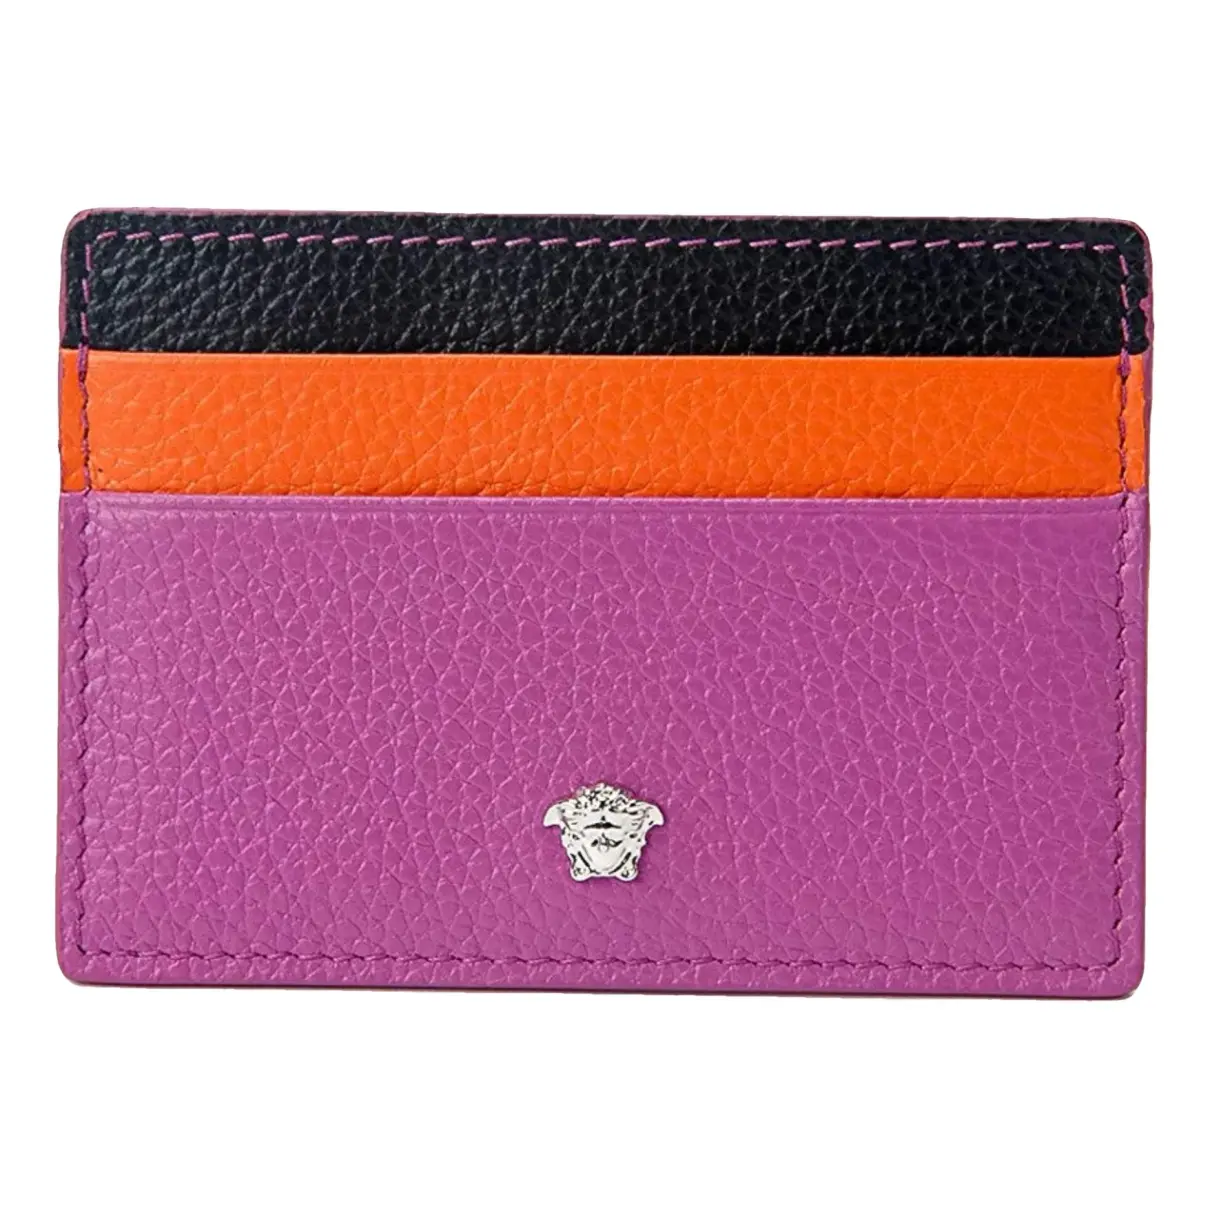 La Medusa leather wallet